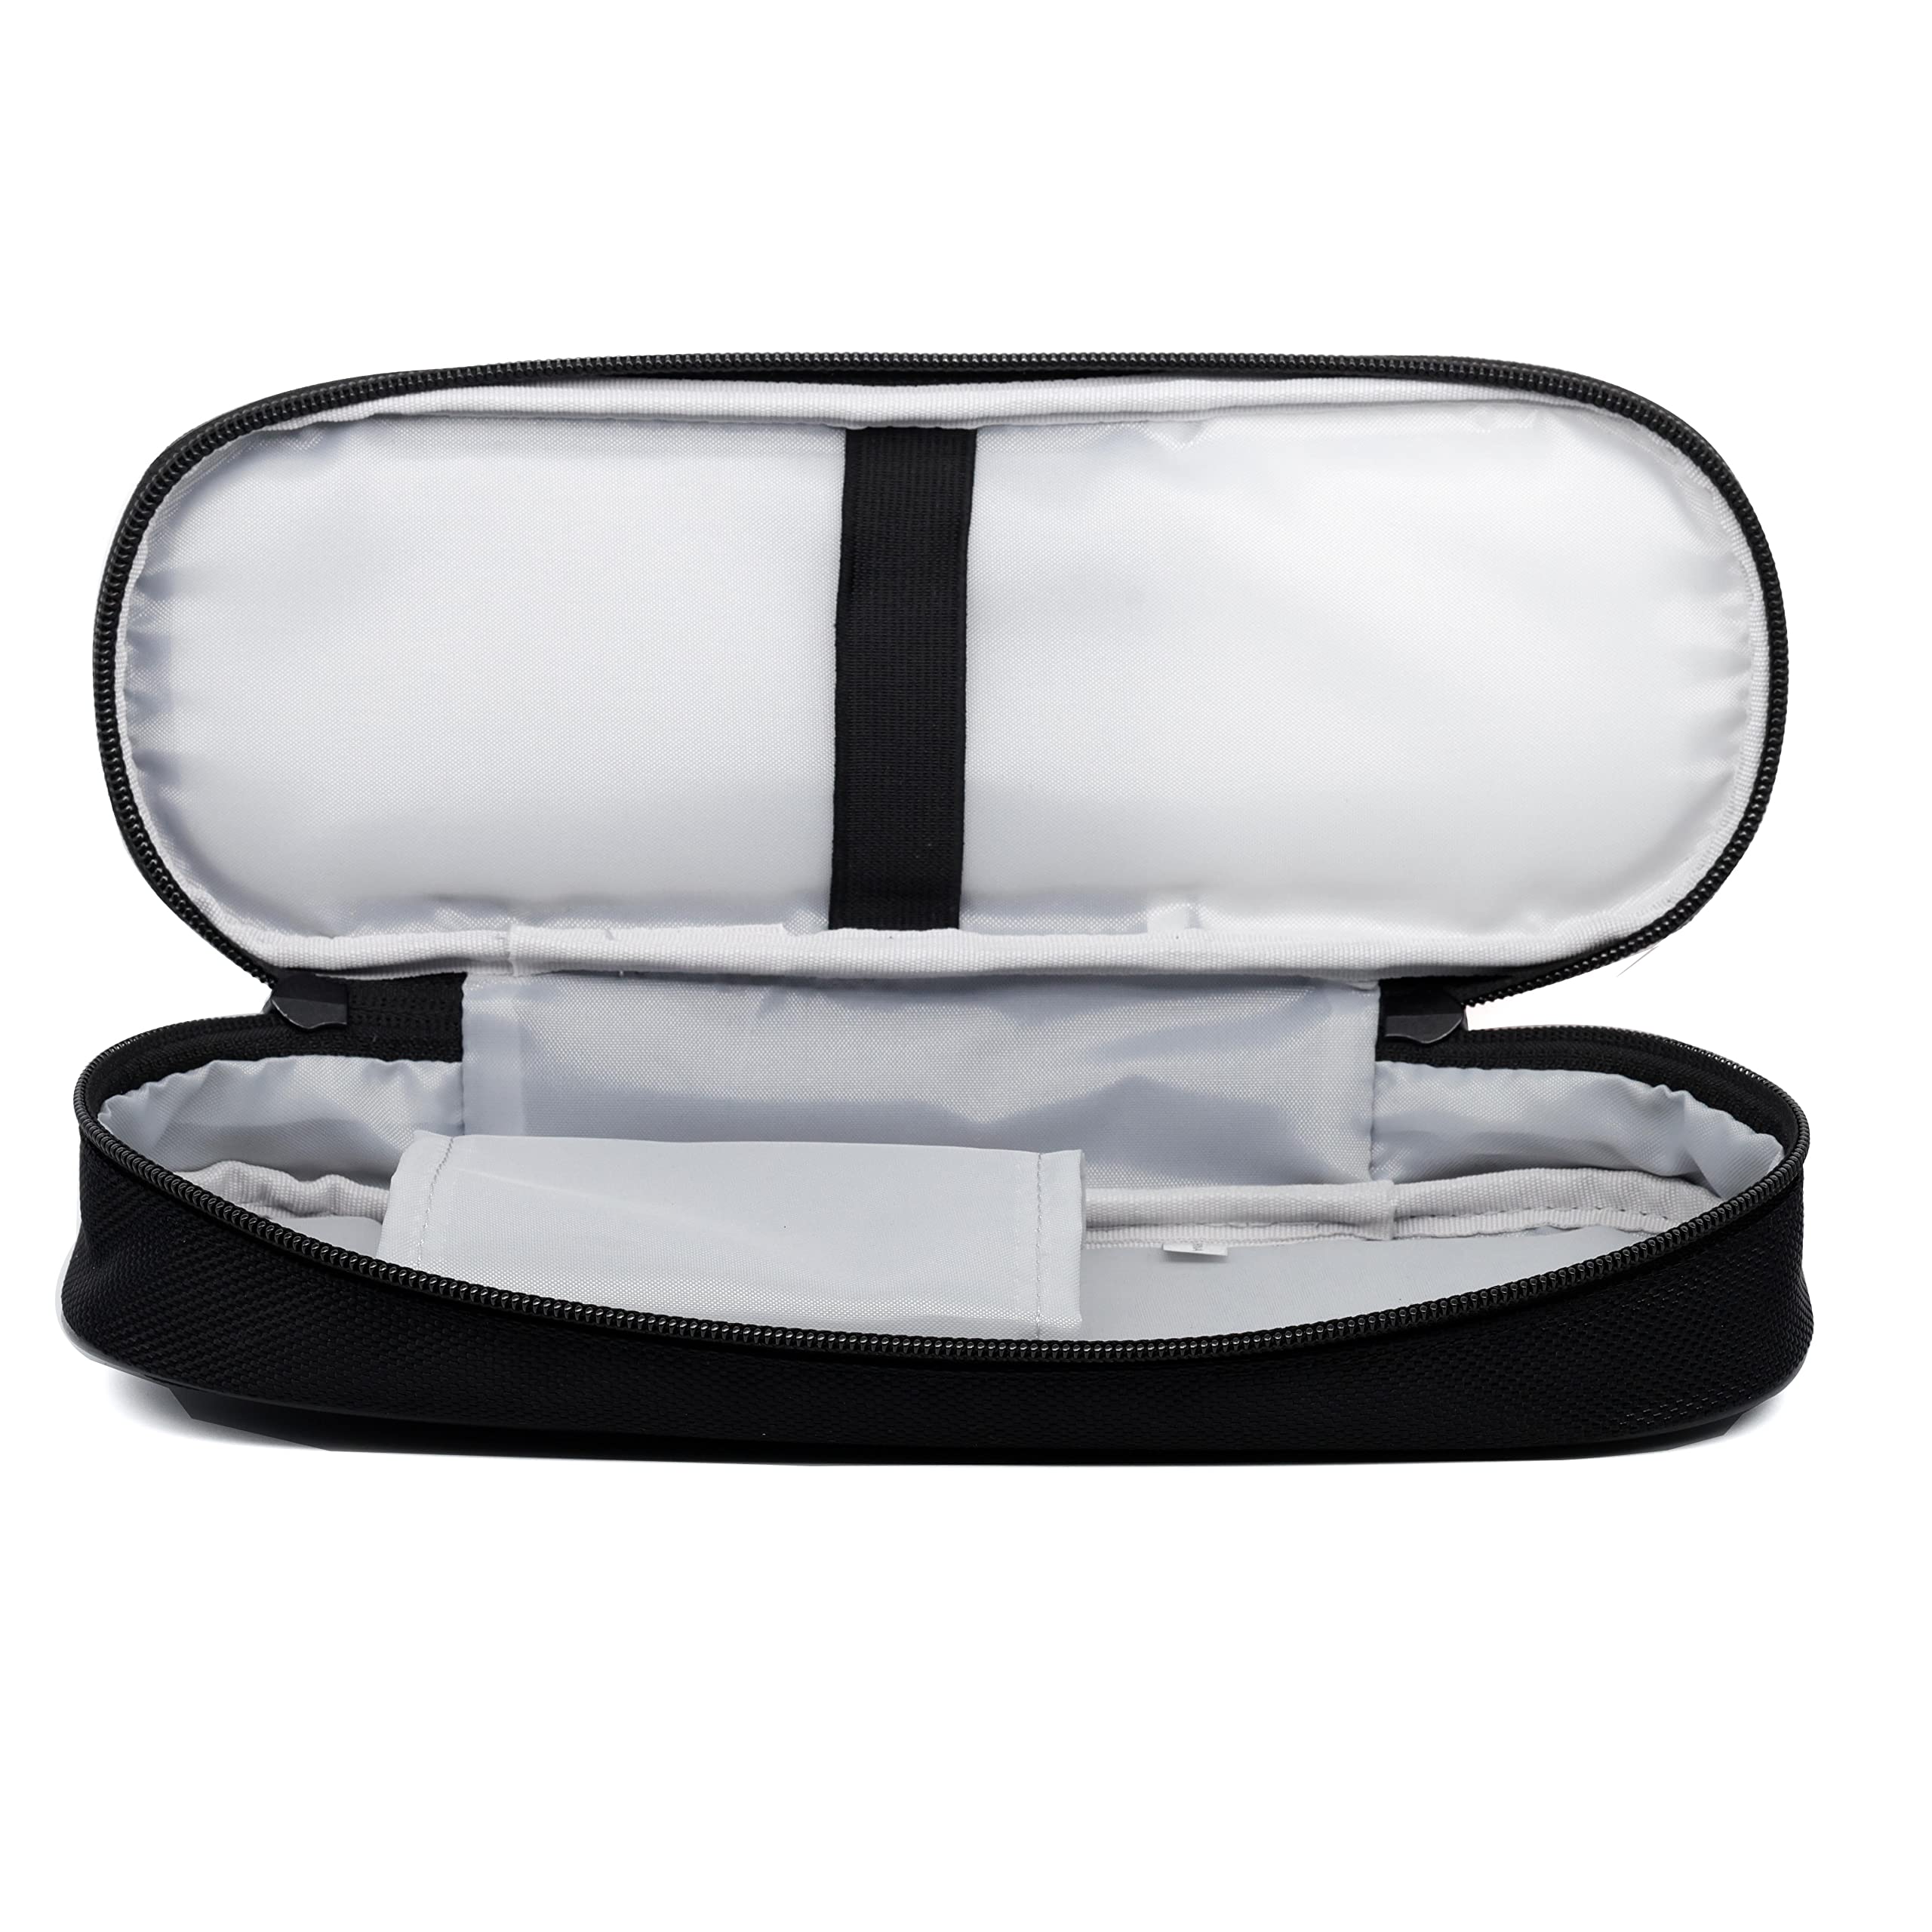 Clamp Meter Soft Case Storage Bag for Fluke T5-1000,T5-600 T6-600 T6-1000 302+